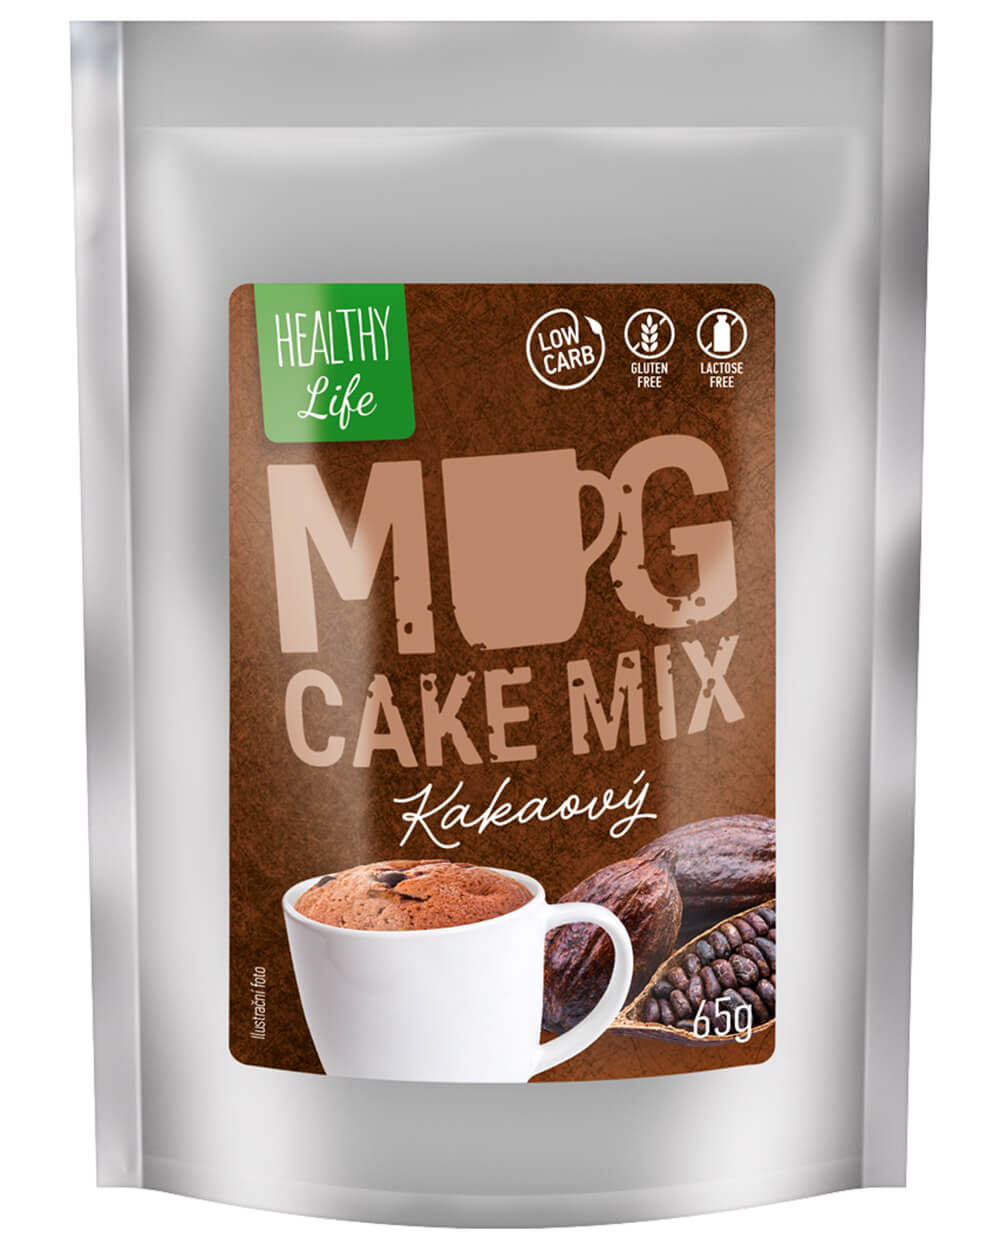 MKM Pack Low carb mug cake kakaový 65g